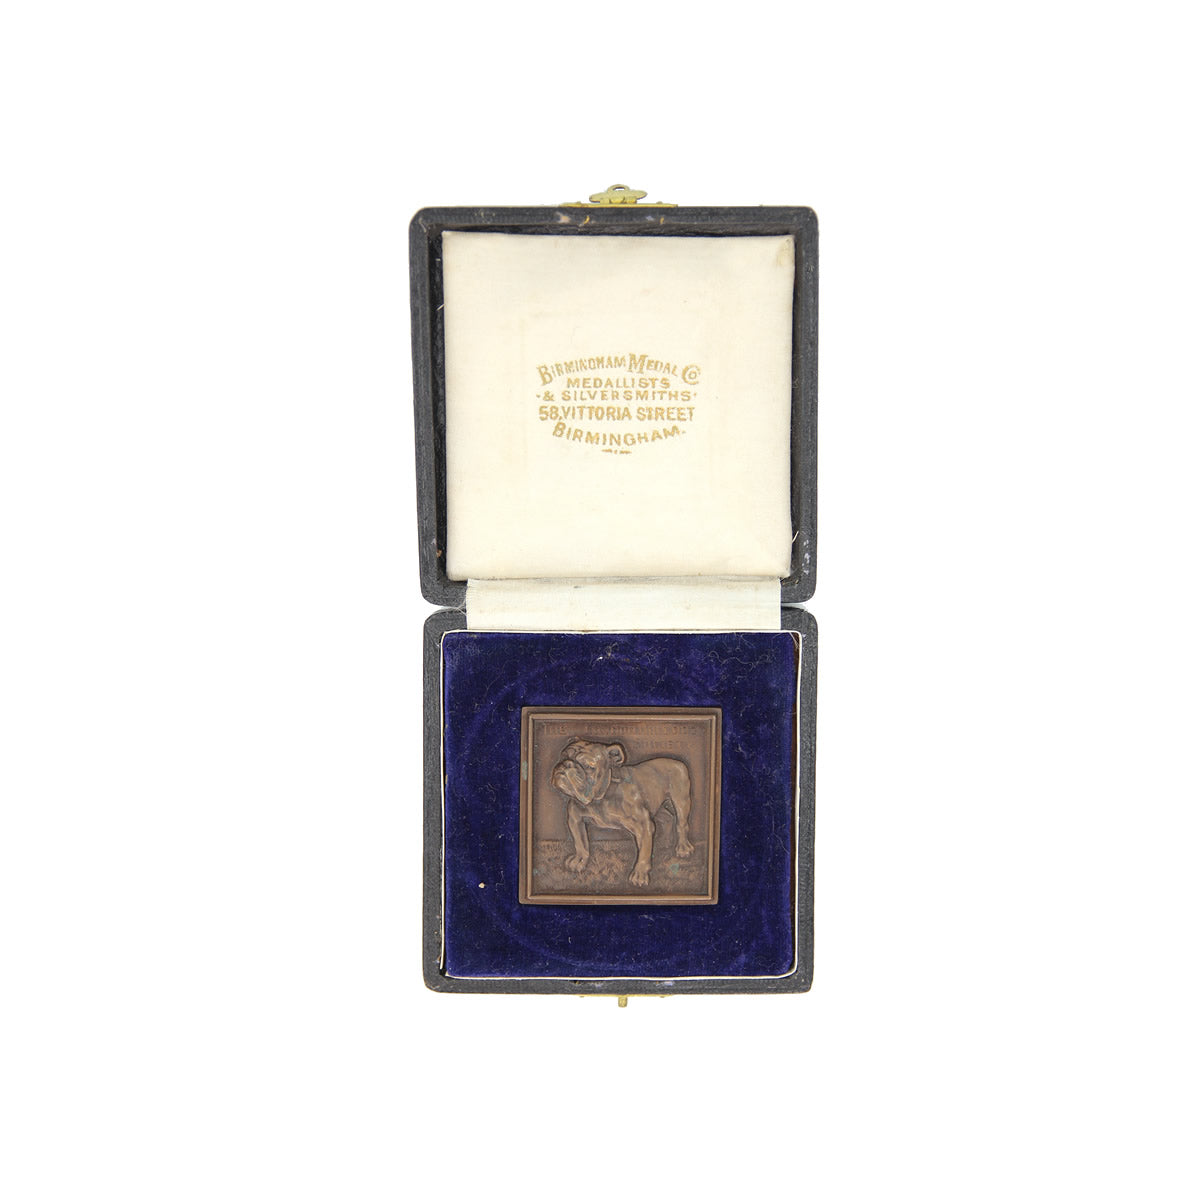 London Bulldog Society Medal, c.1925